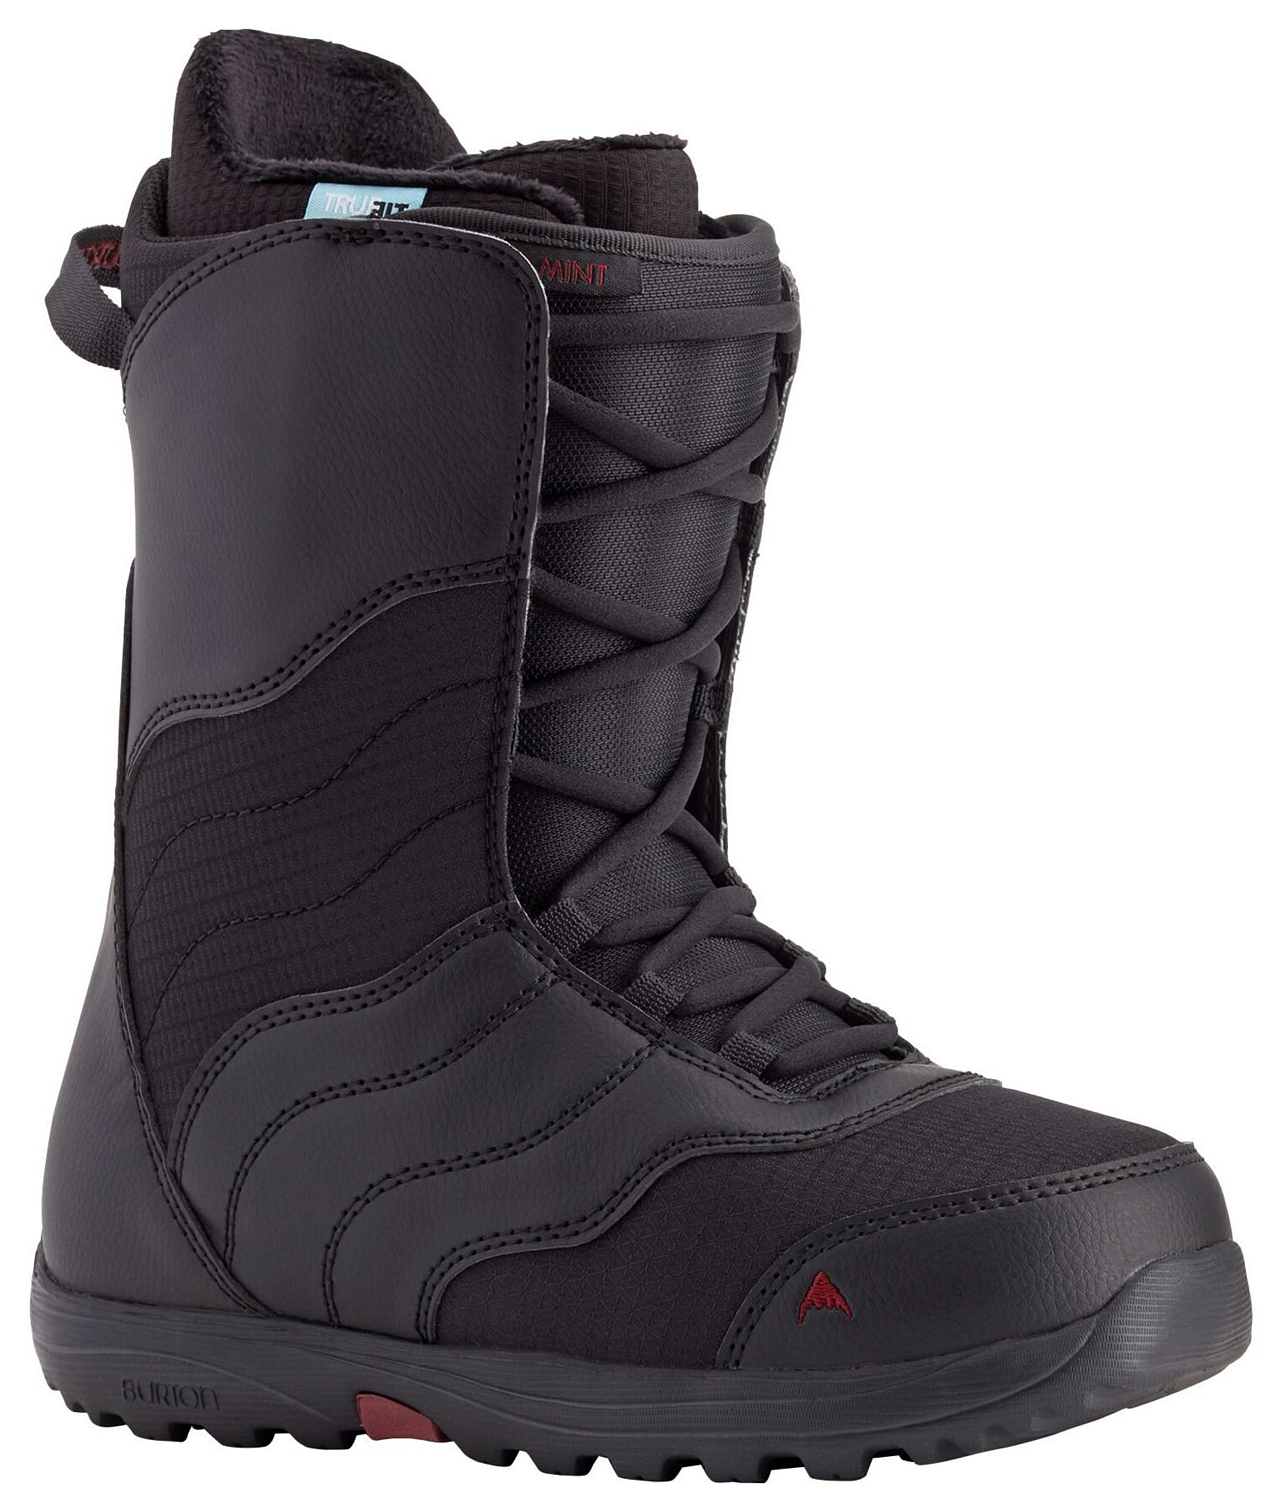 Ботинки сноубордические Burton 20-21 Mint Lace Black ботинки сноубордические burton 21 22 moto boa gray